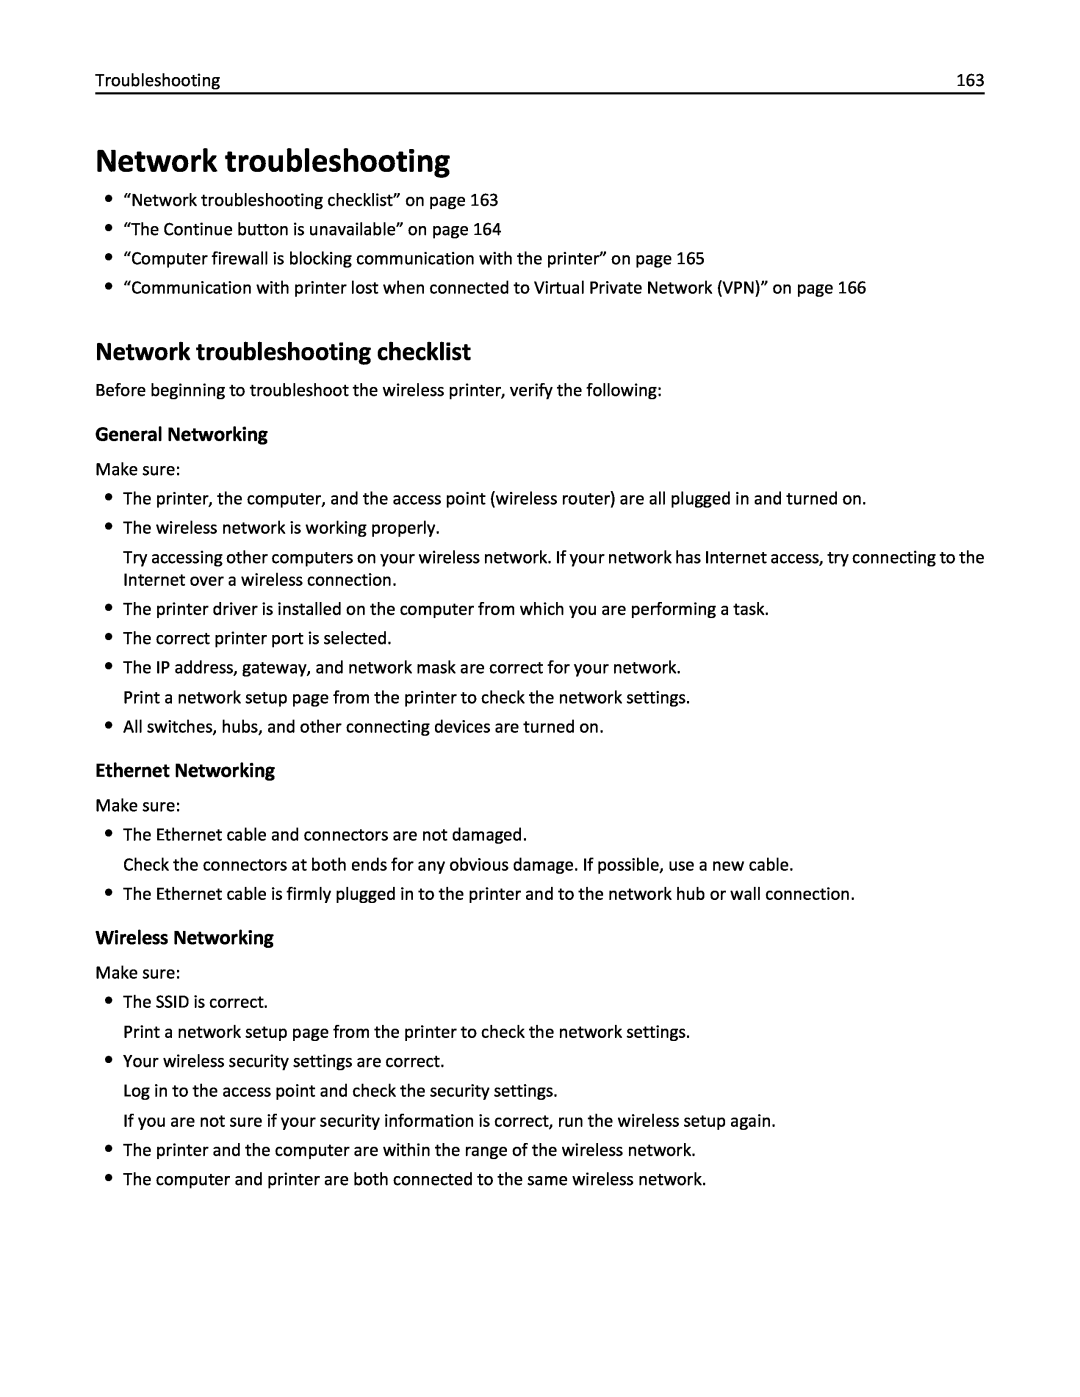 Lexmark 200, 20E manual Network troubleshooting checklist 